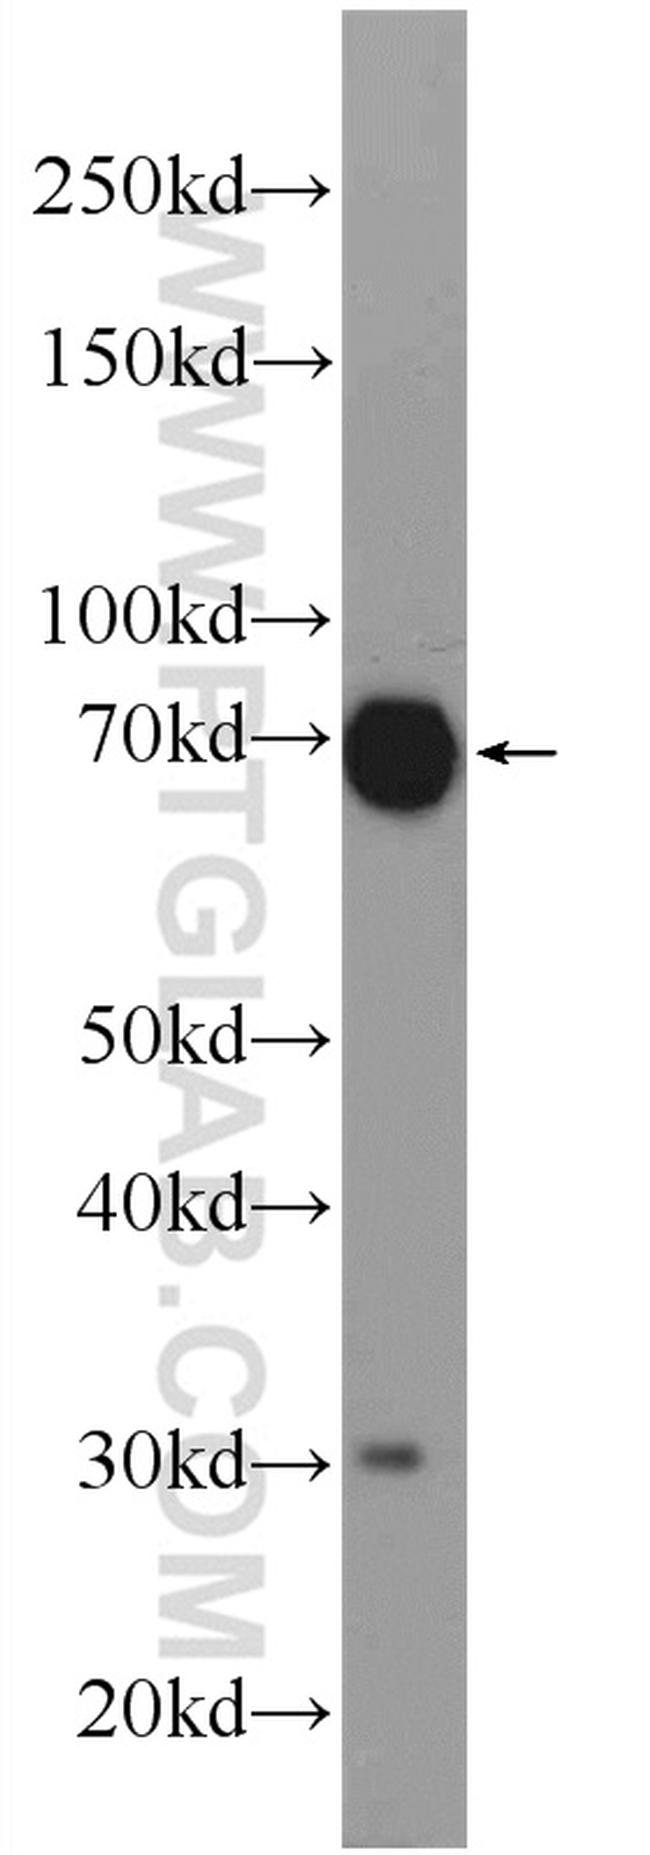 CA9 Antibody in Western Blot (WB)